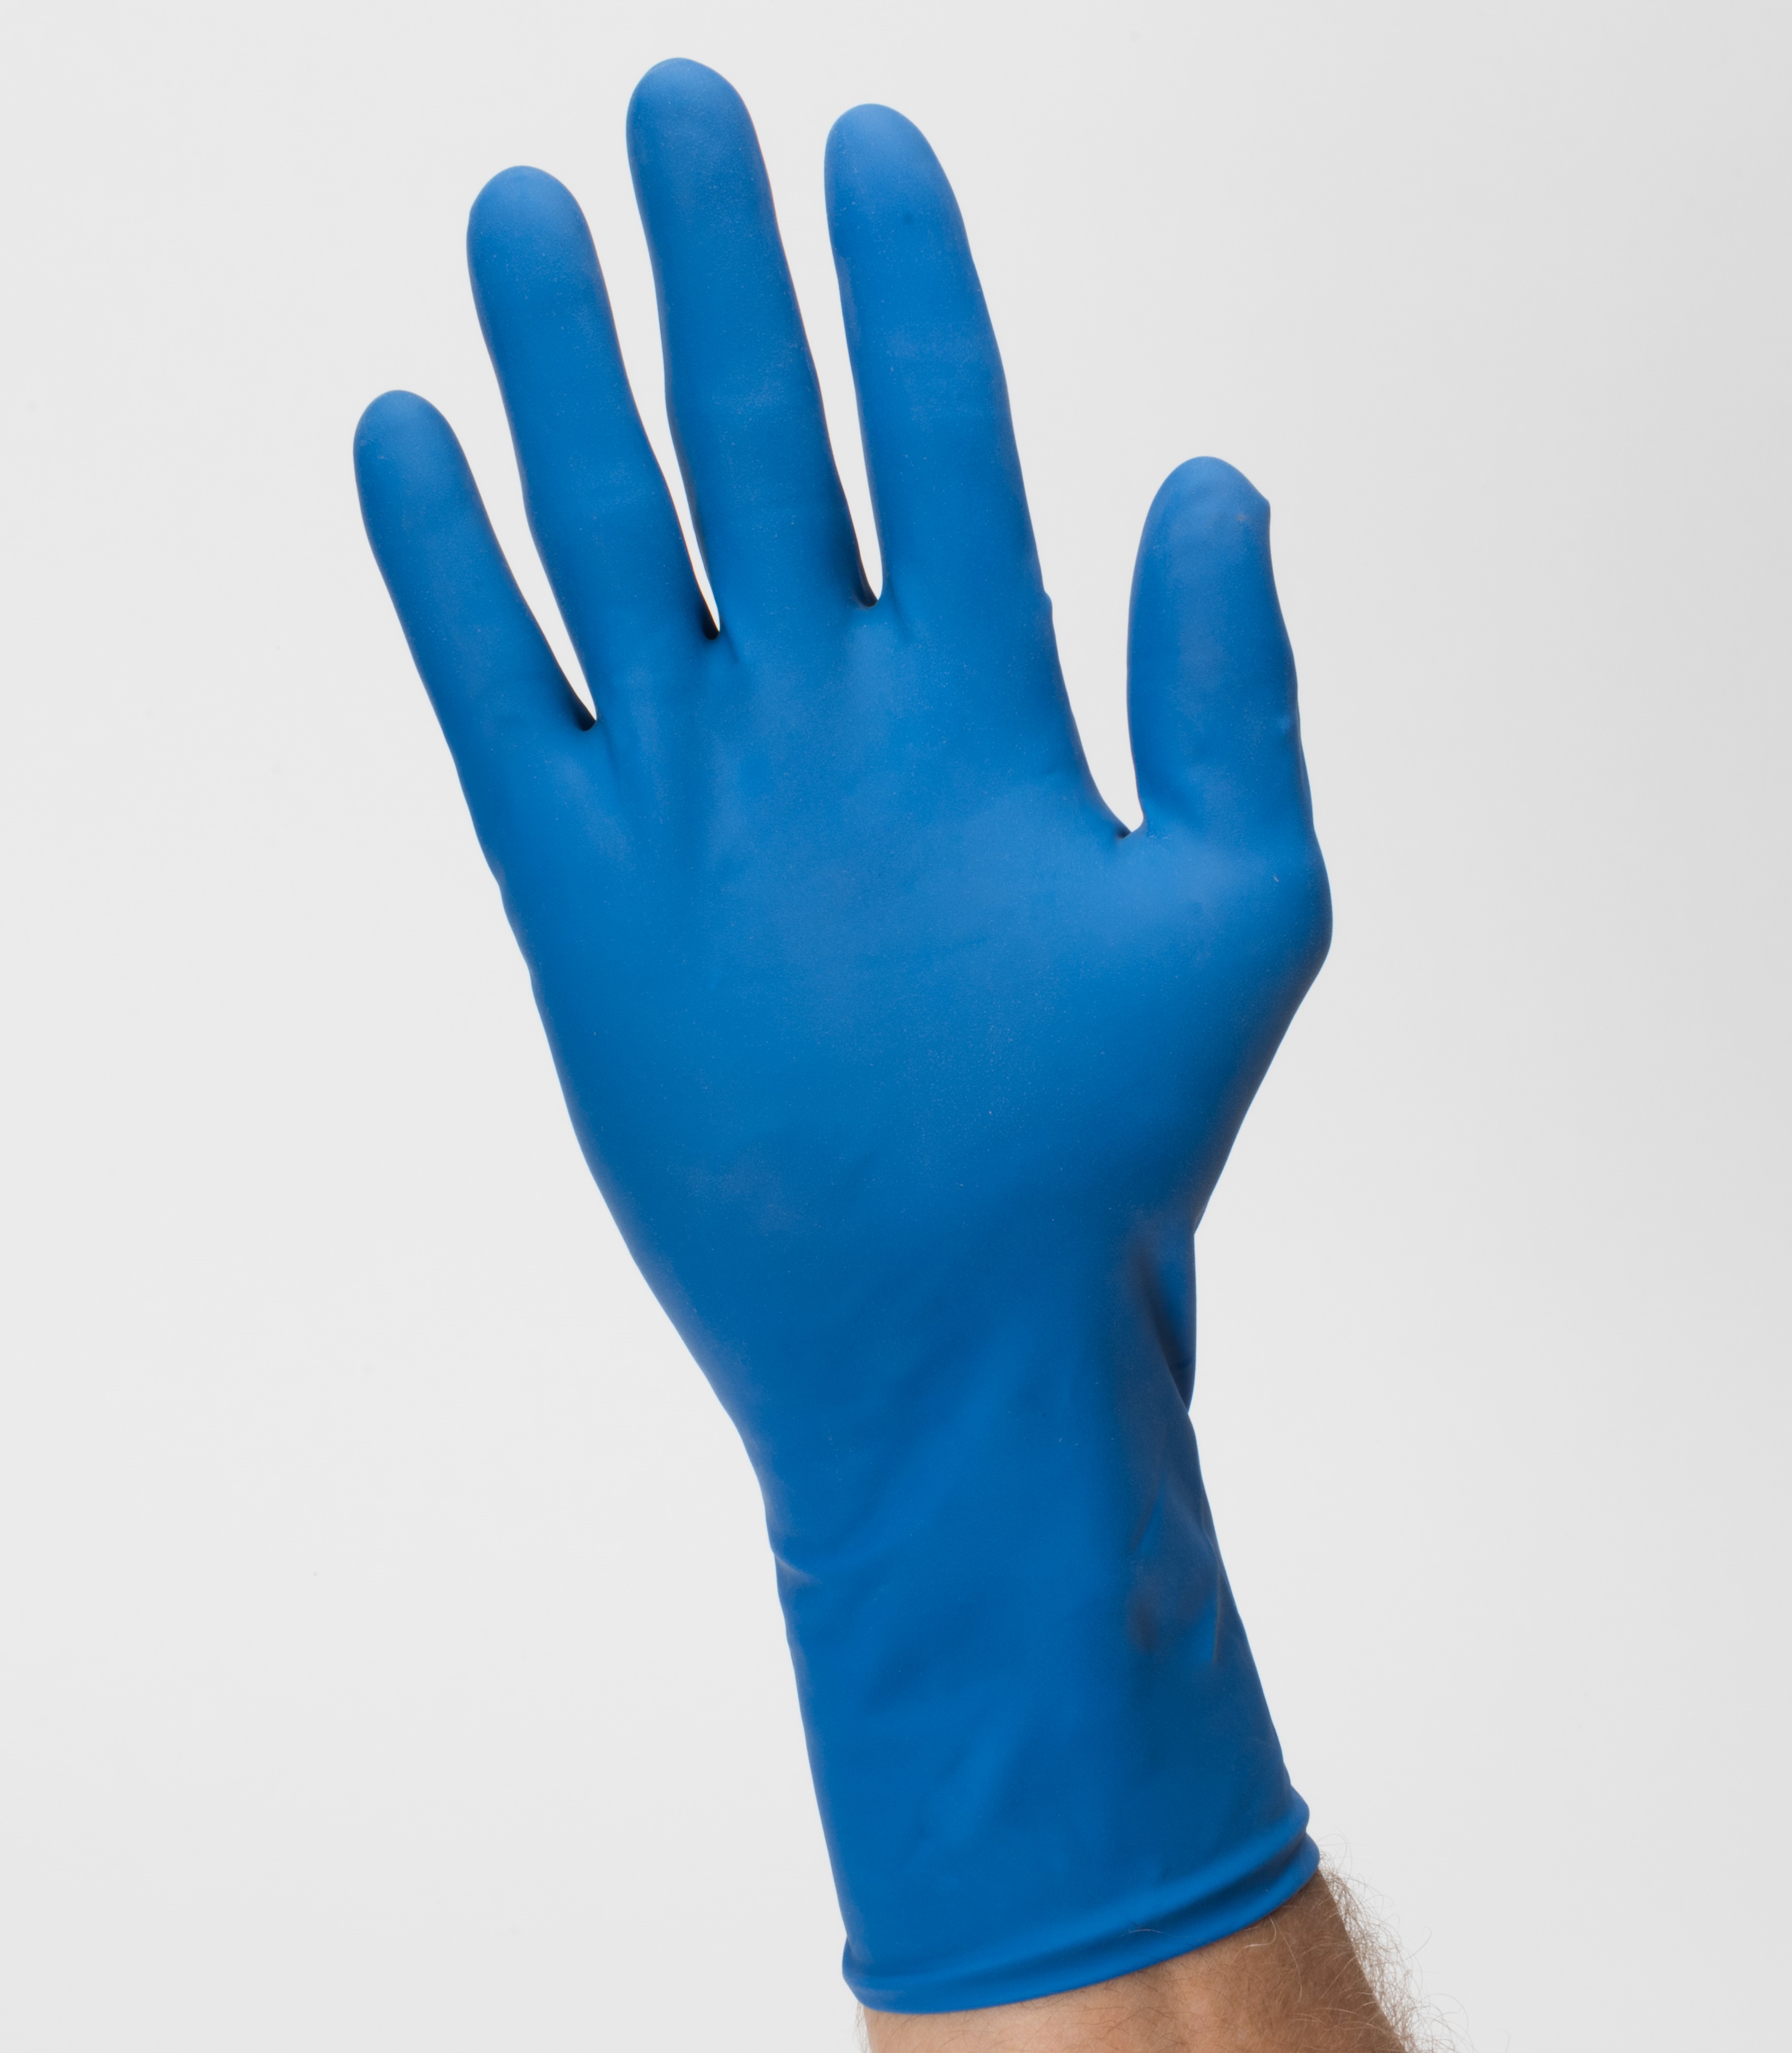 GO0020-13 mil Latex Glove